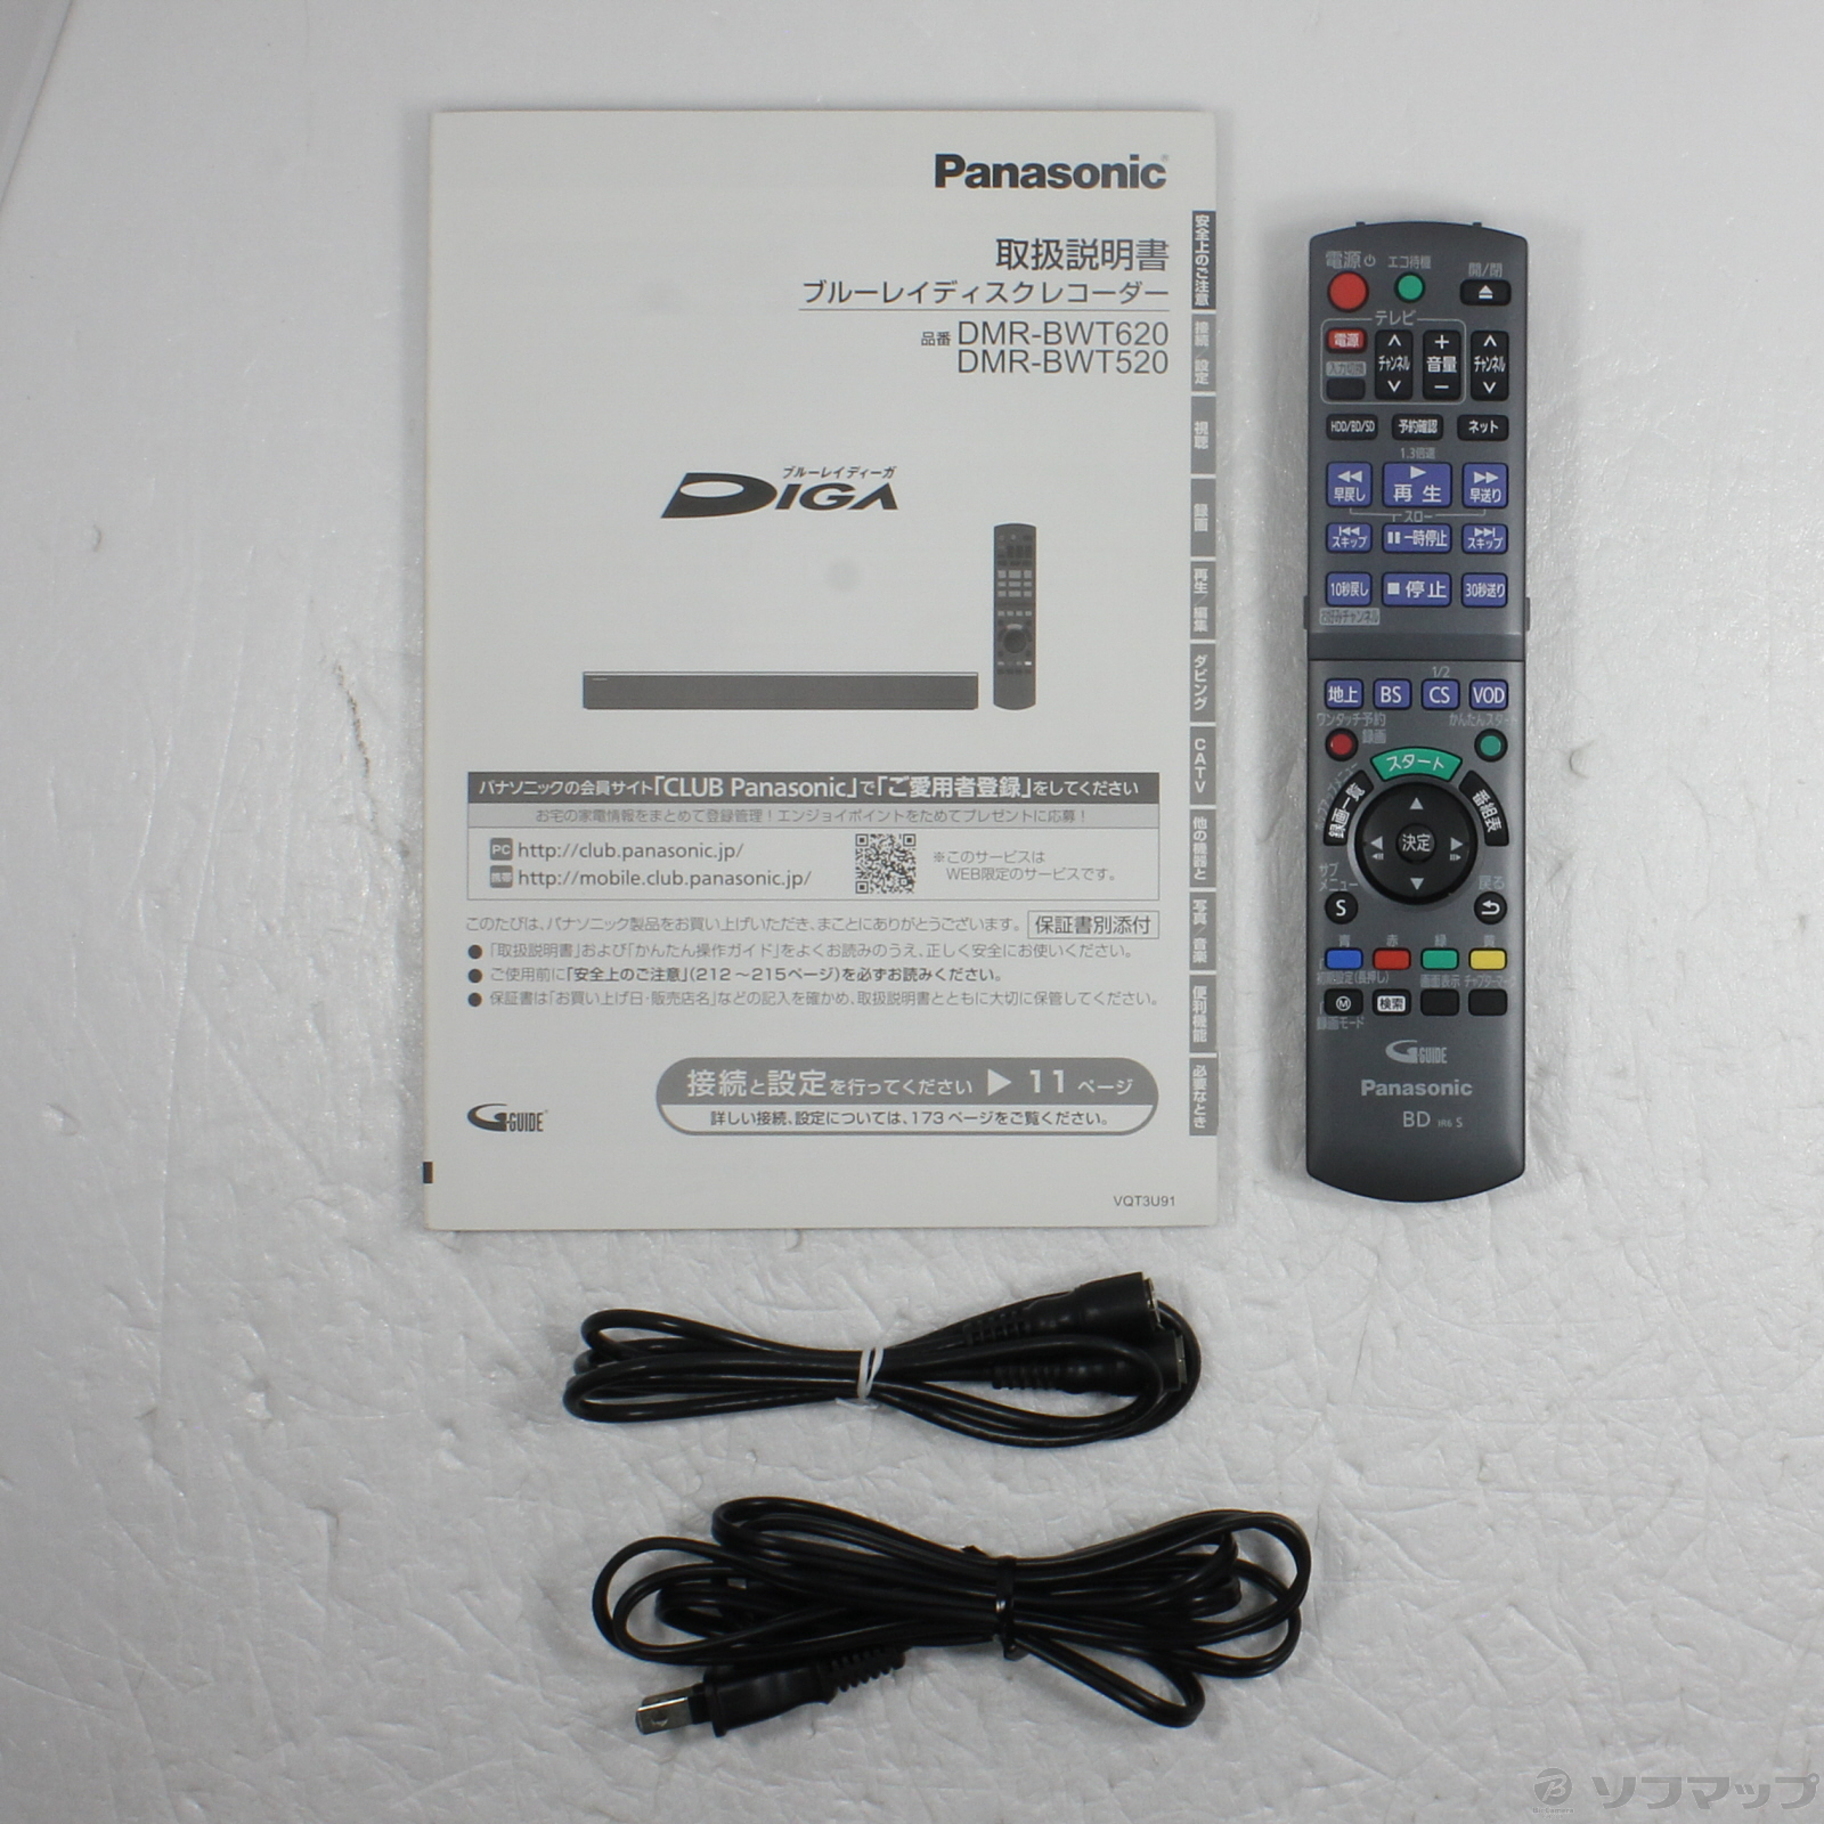 Panasonic ブルーレイレコーダー DIGA DMR-BWT620 1TB - テレビ/映像機器